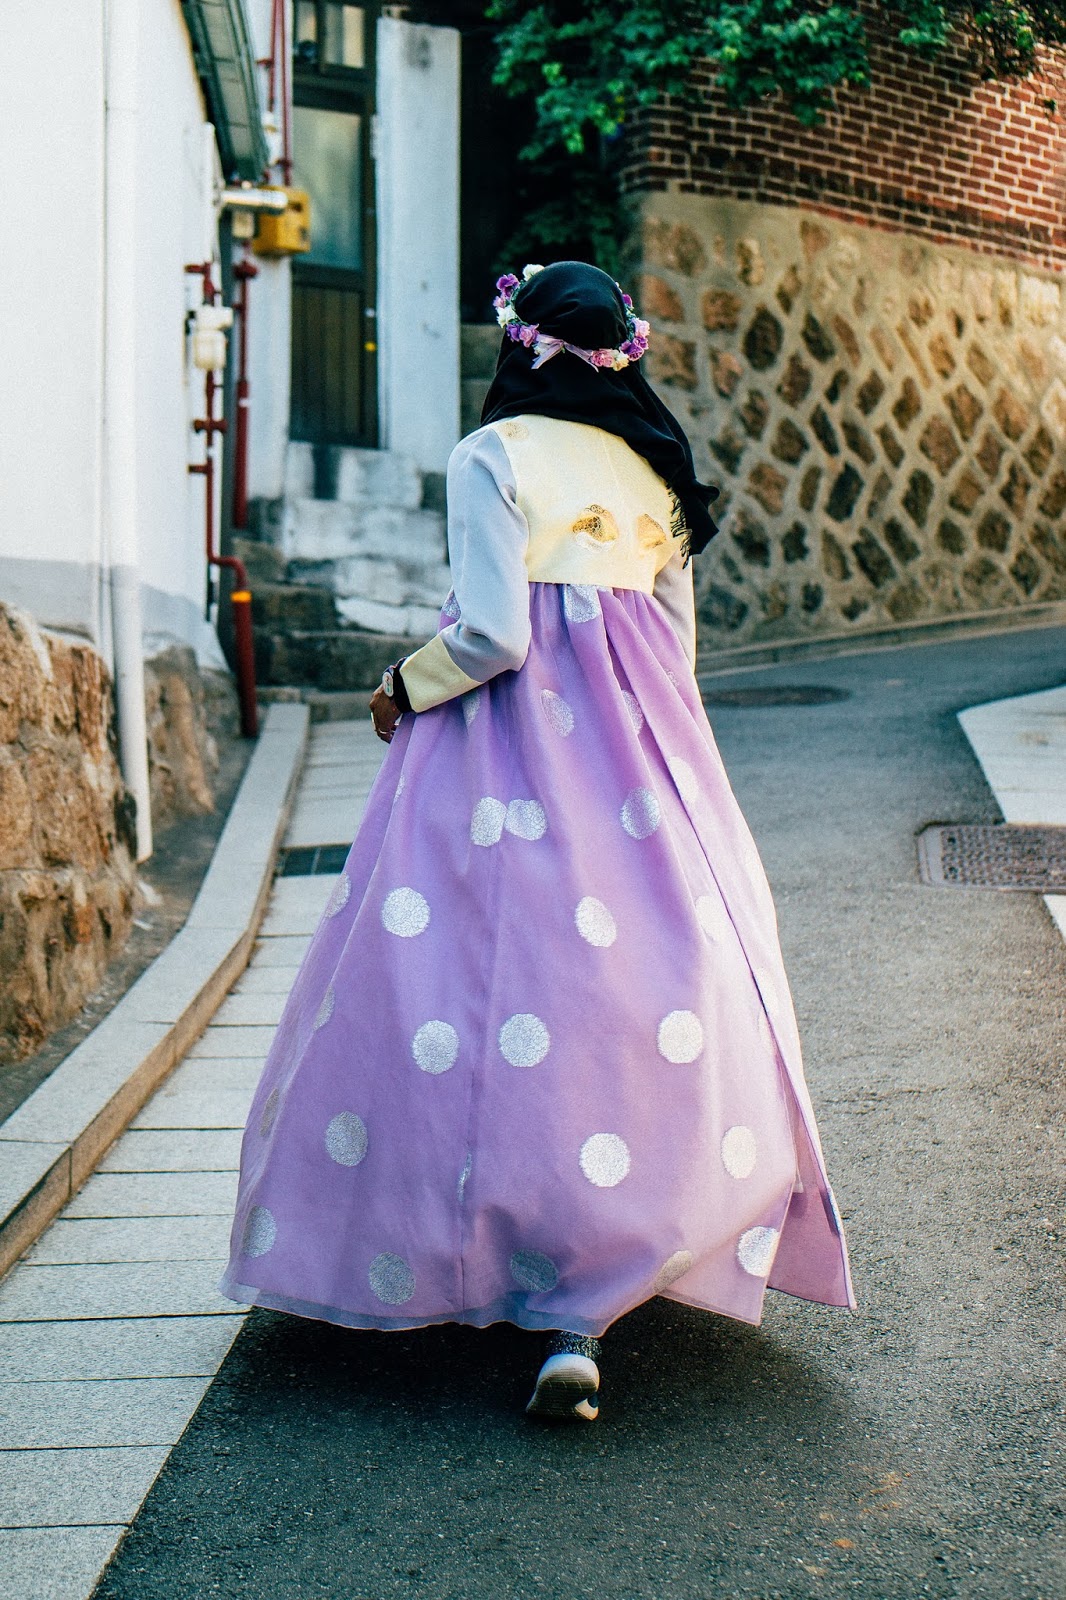 Wearing the Traditional Korean Hanbok  at Bukchon Hanok 